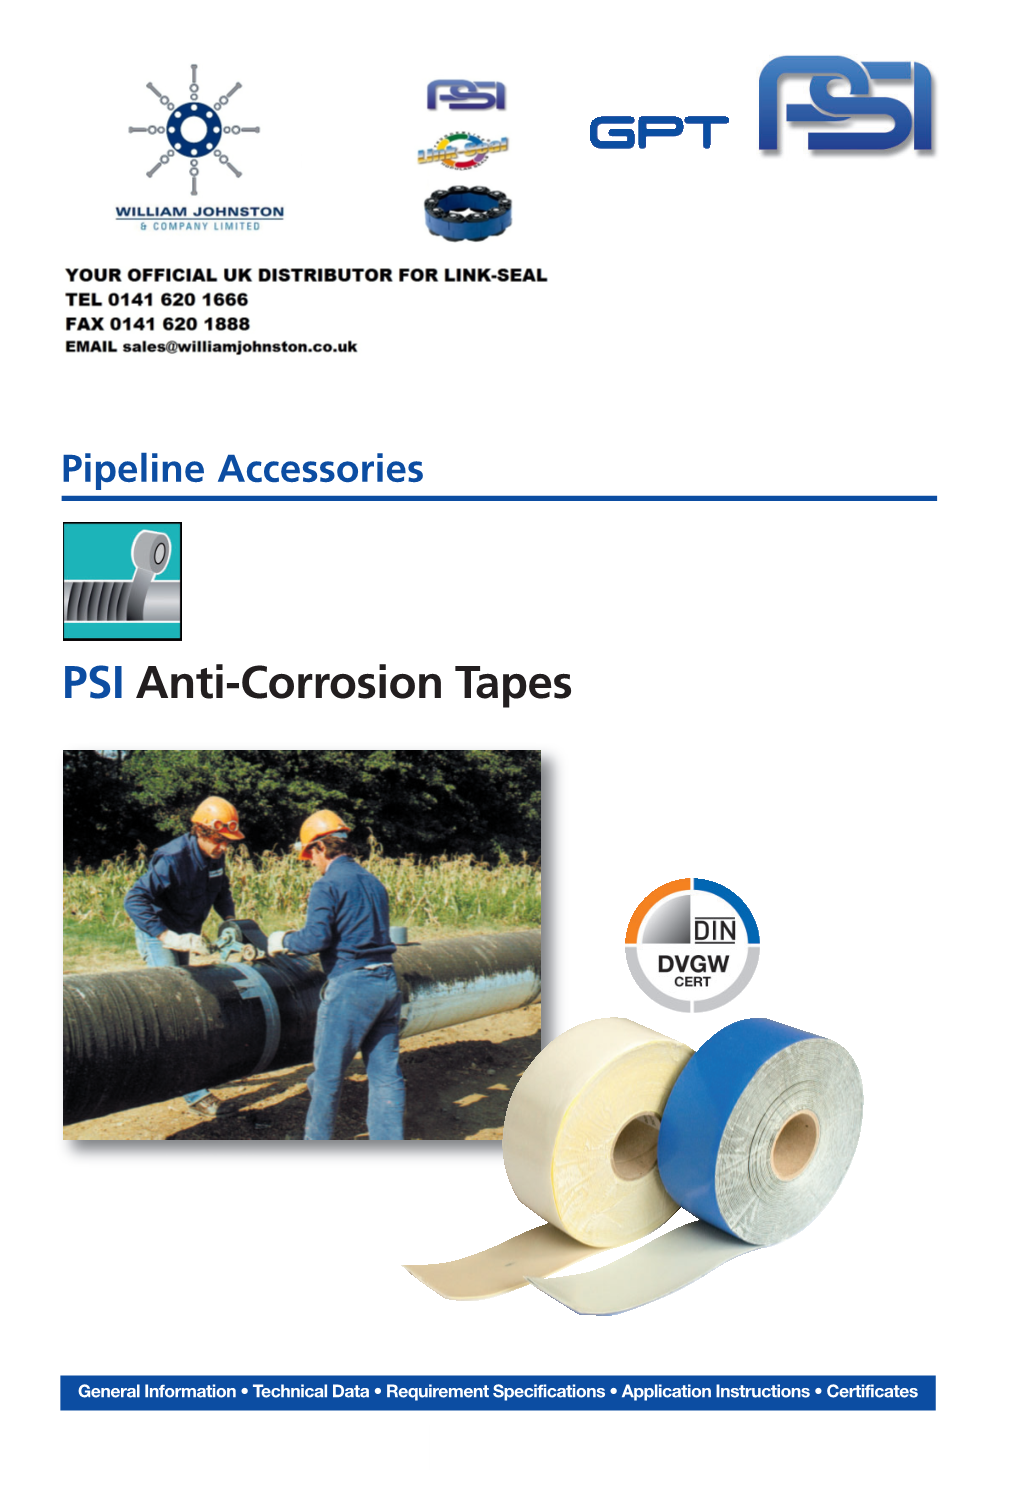 PSI Anti-Corrosion Tapes